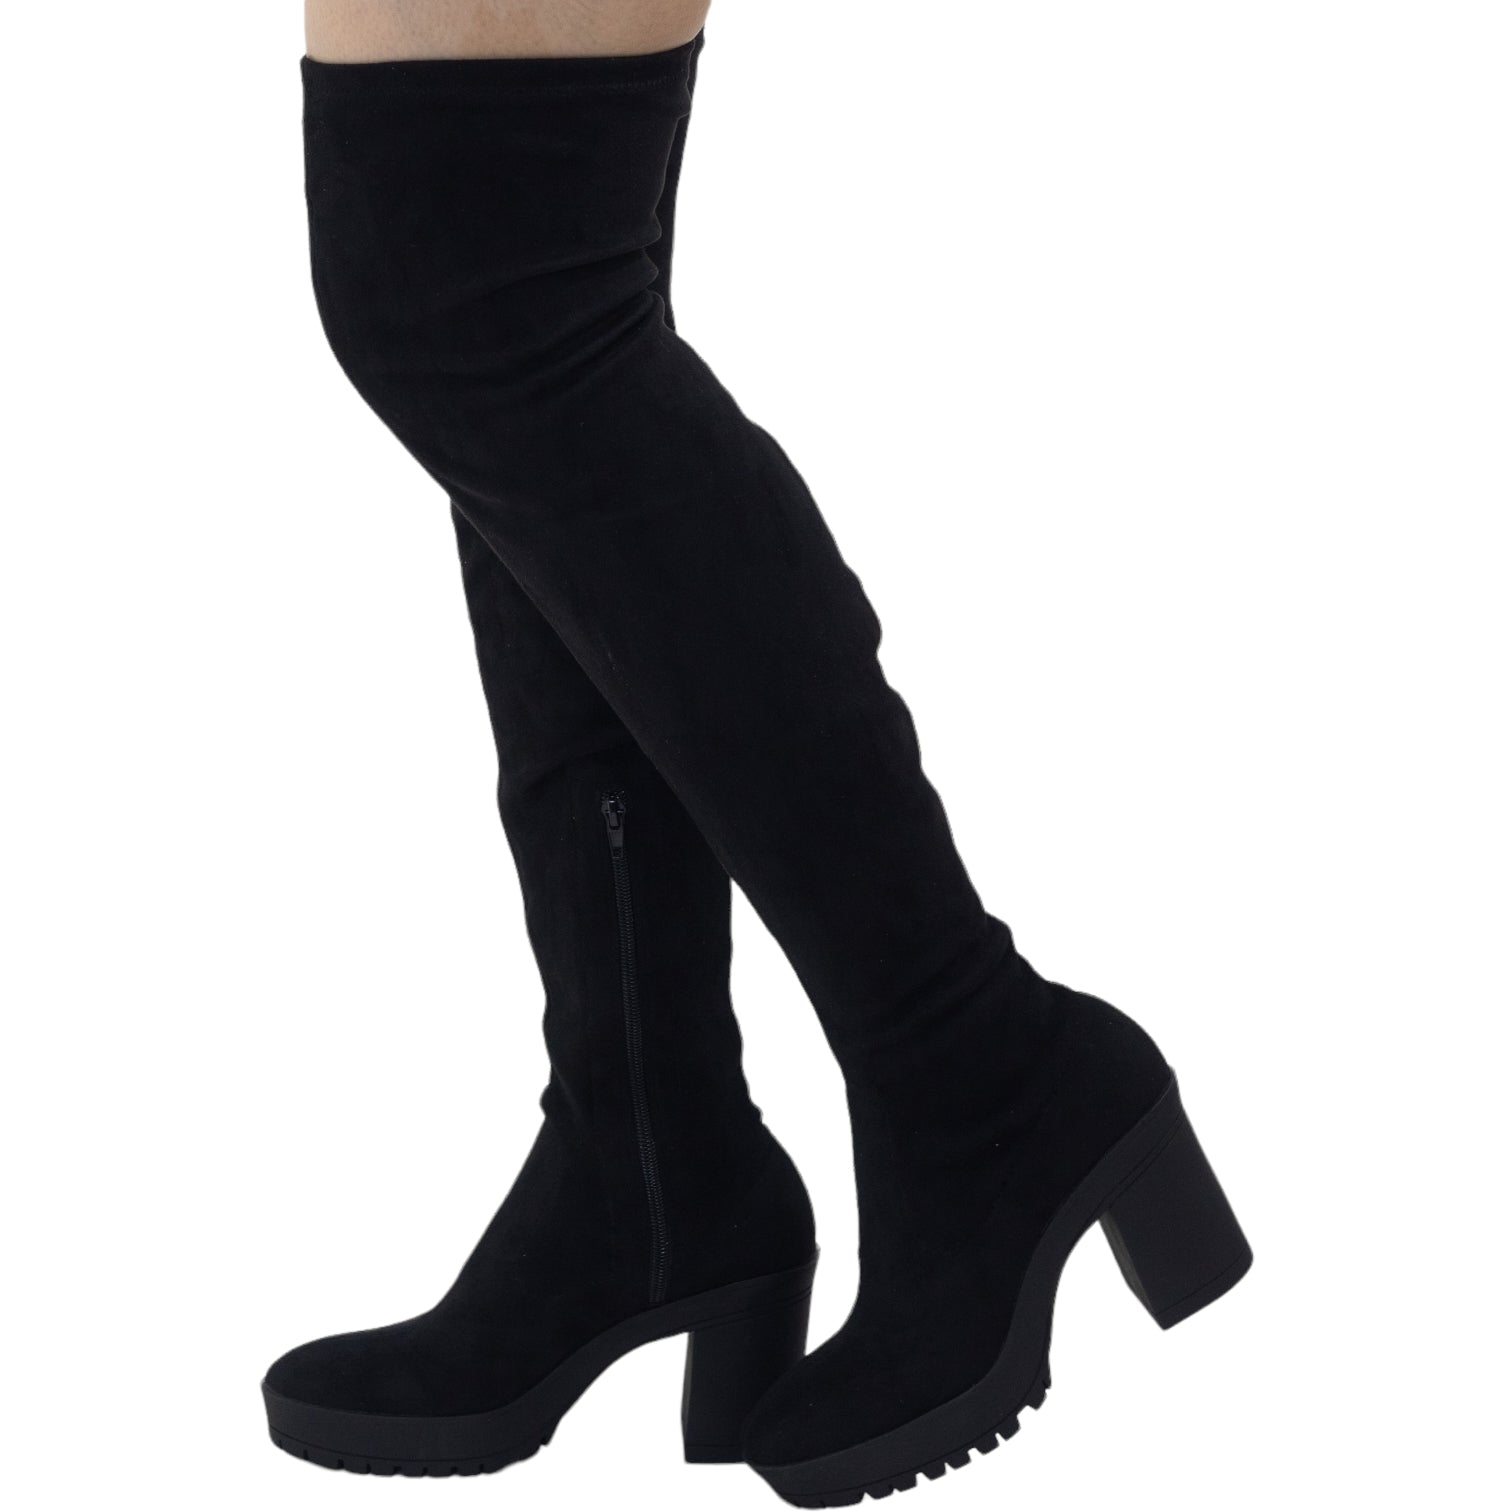 Black thigh high back boot 9cm heel garnet